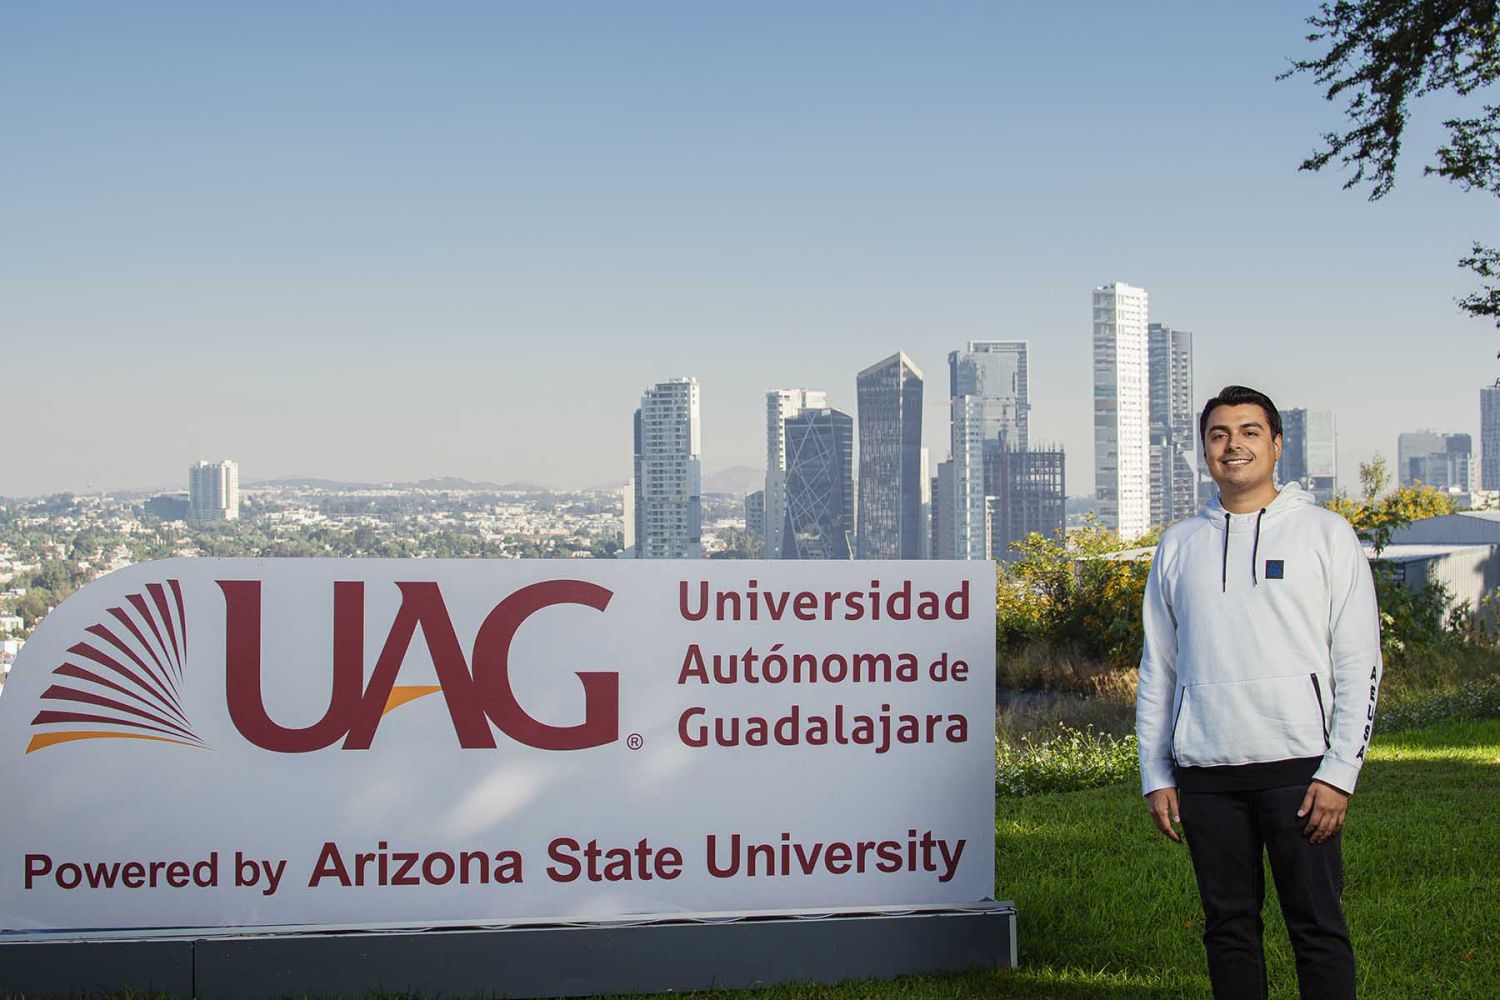 Uag Powered By Arizona State University Asu Formaci N Que Va M S